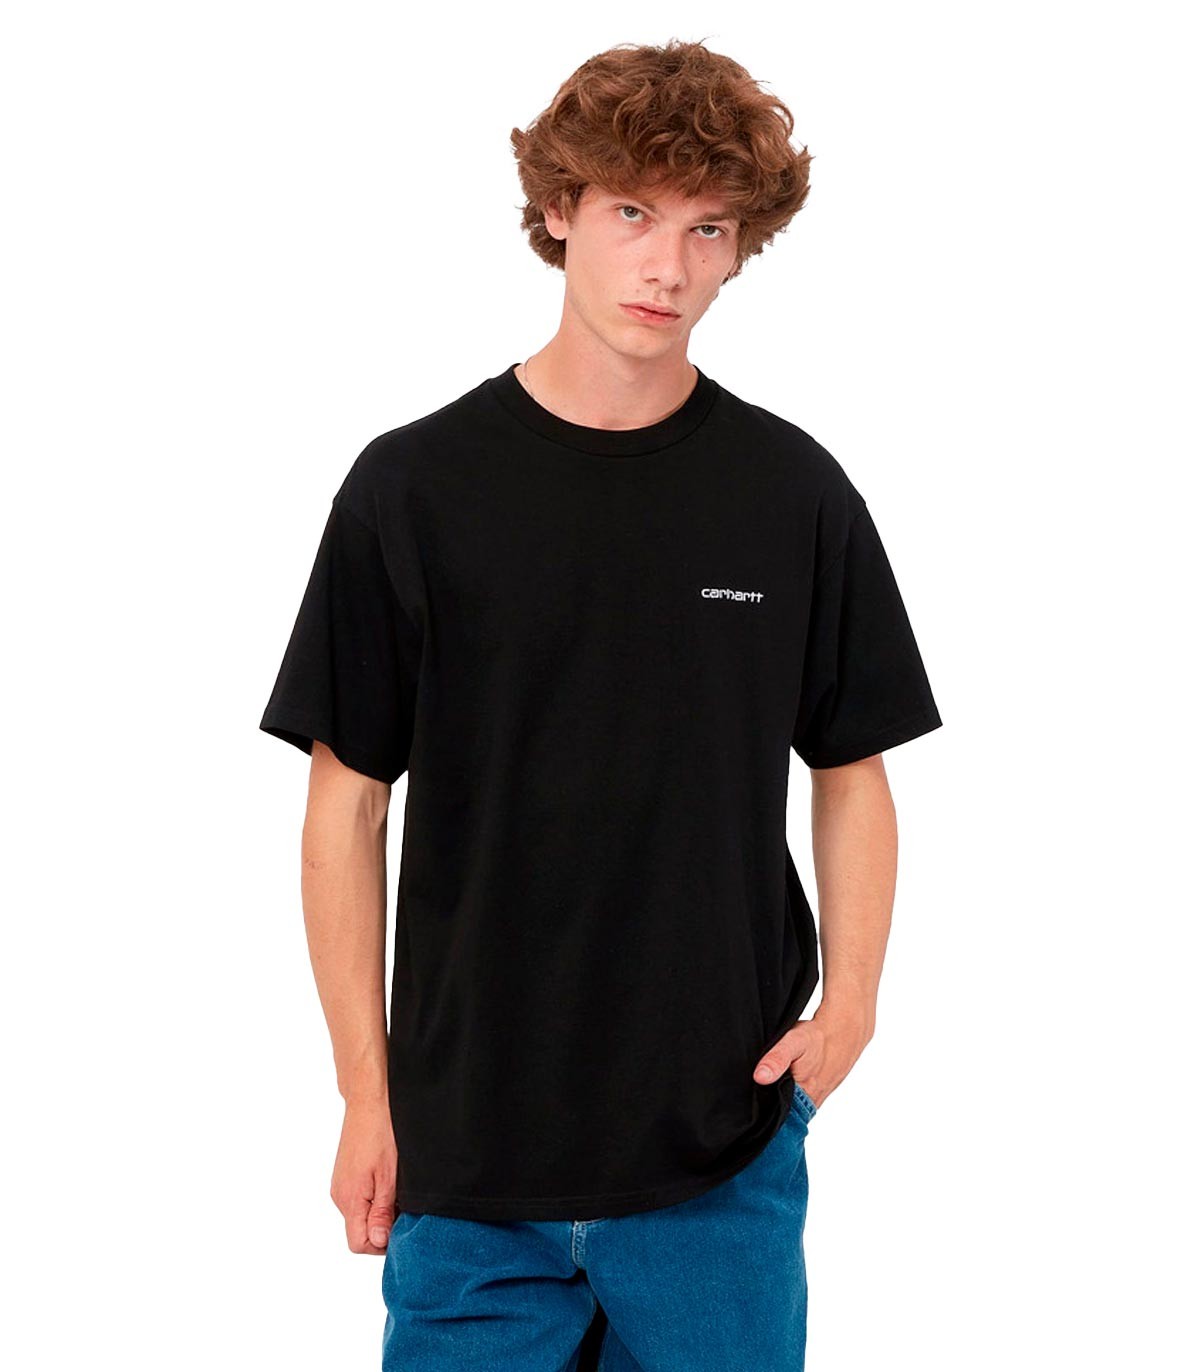 Carhartt Wip - Camisetas S/S Script Embroidery T-S - Negro